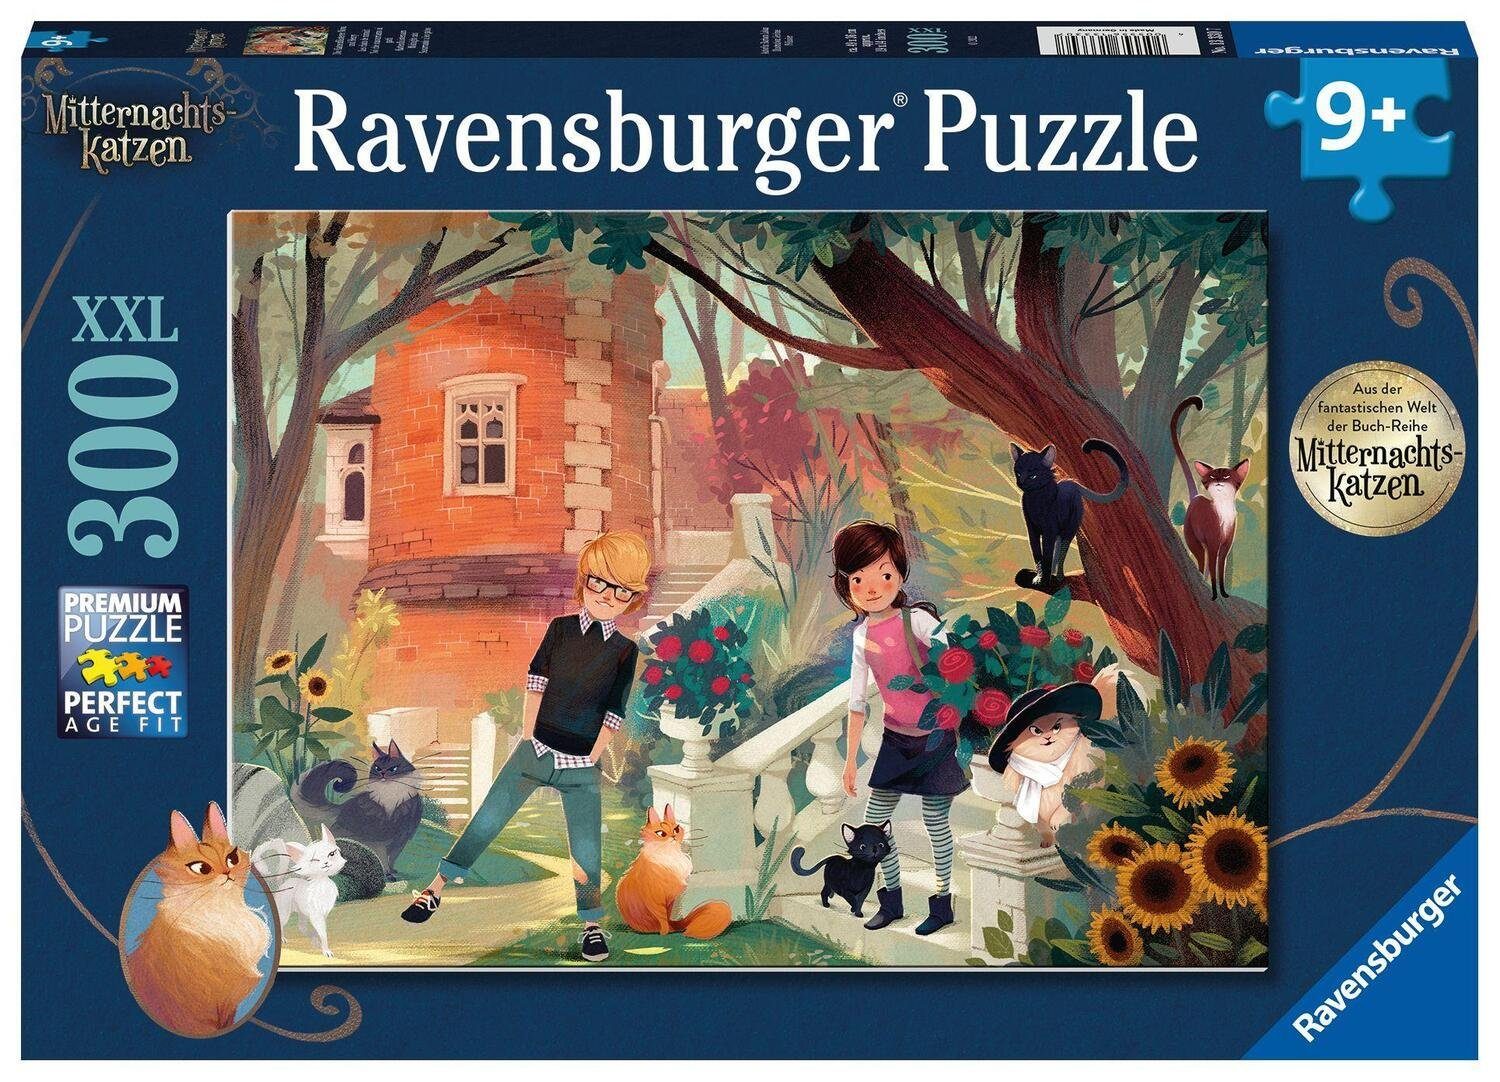 Ravensburger Puzzle Ravensburger Kinderpuzzle Nova Katzenflüsterer EAN/ISBN: und..., 4005556133307 Die 300 13330 Puzzleteile, 